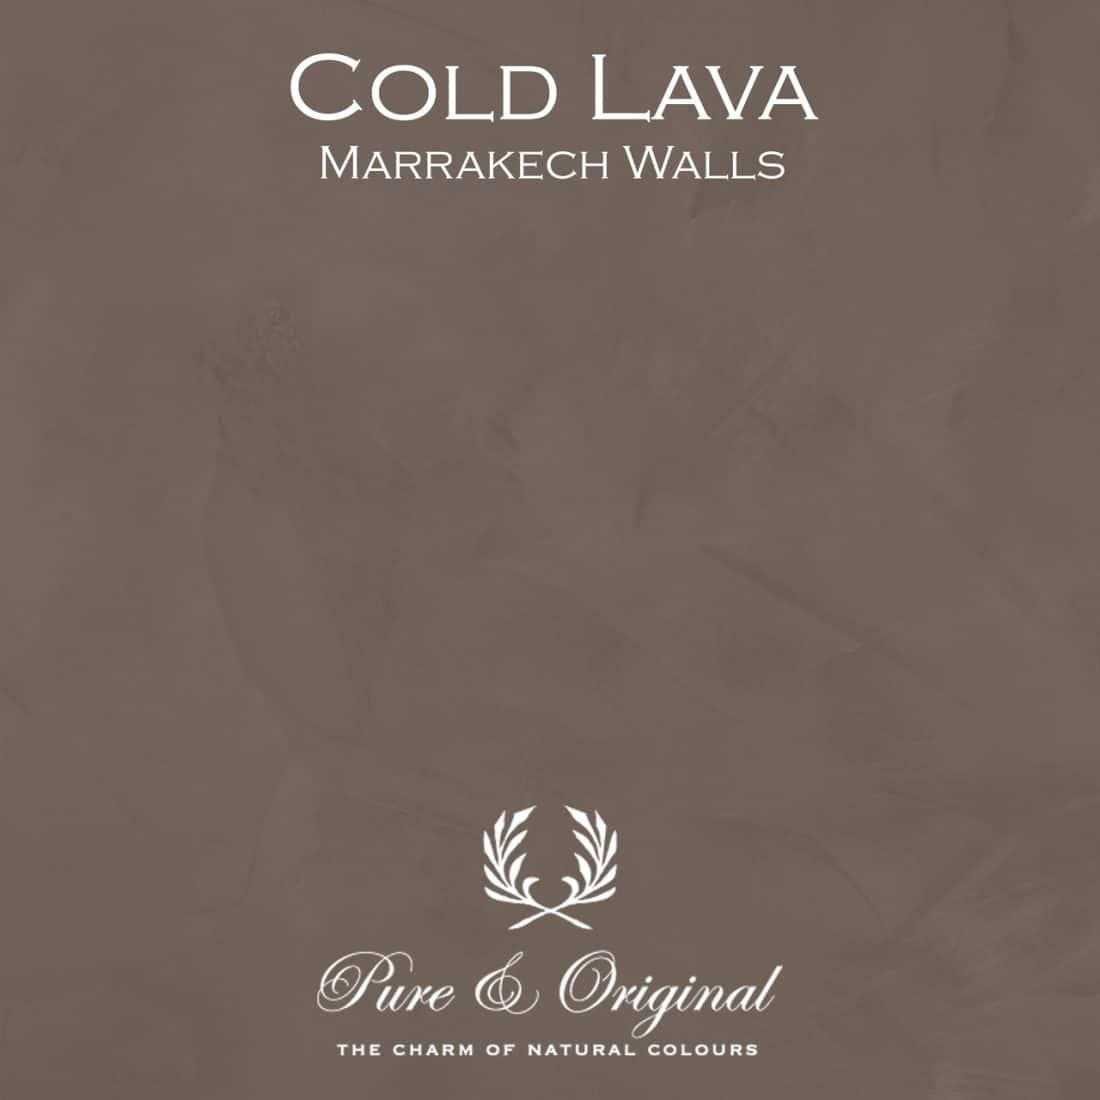 Cold Lava Marrakech Walls Pure Original